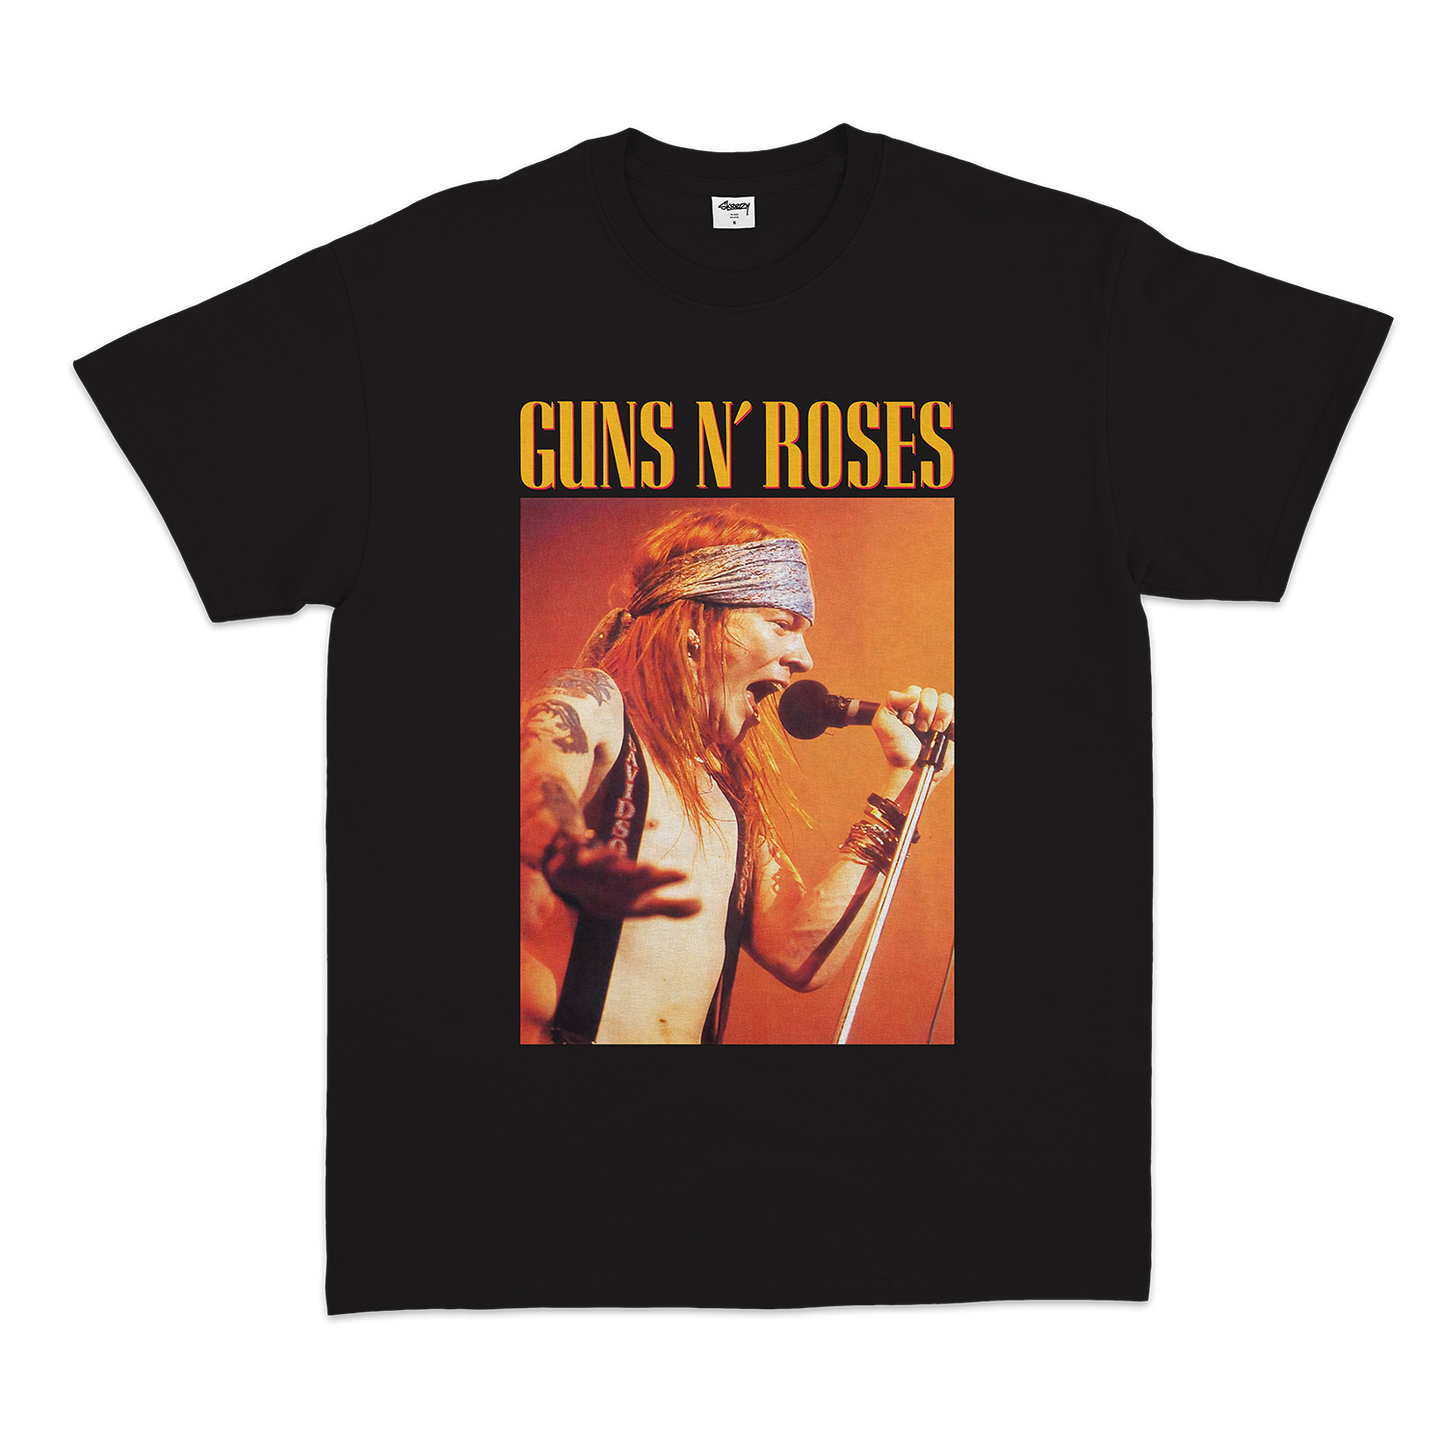 Guns N' Roses tee